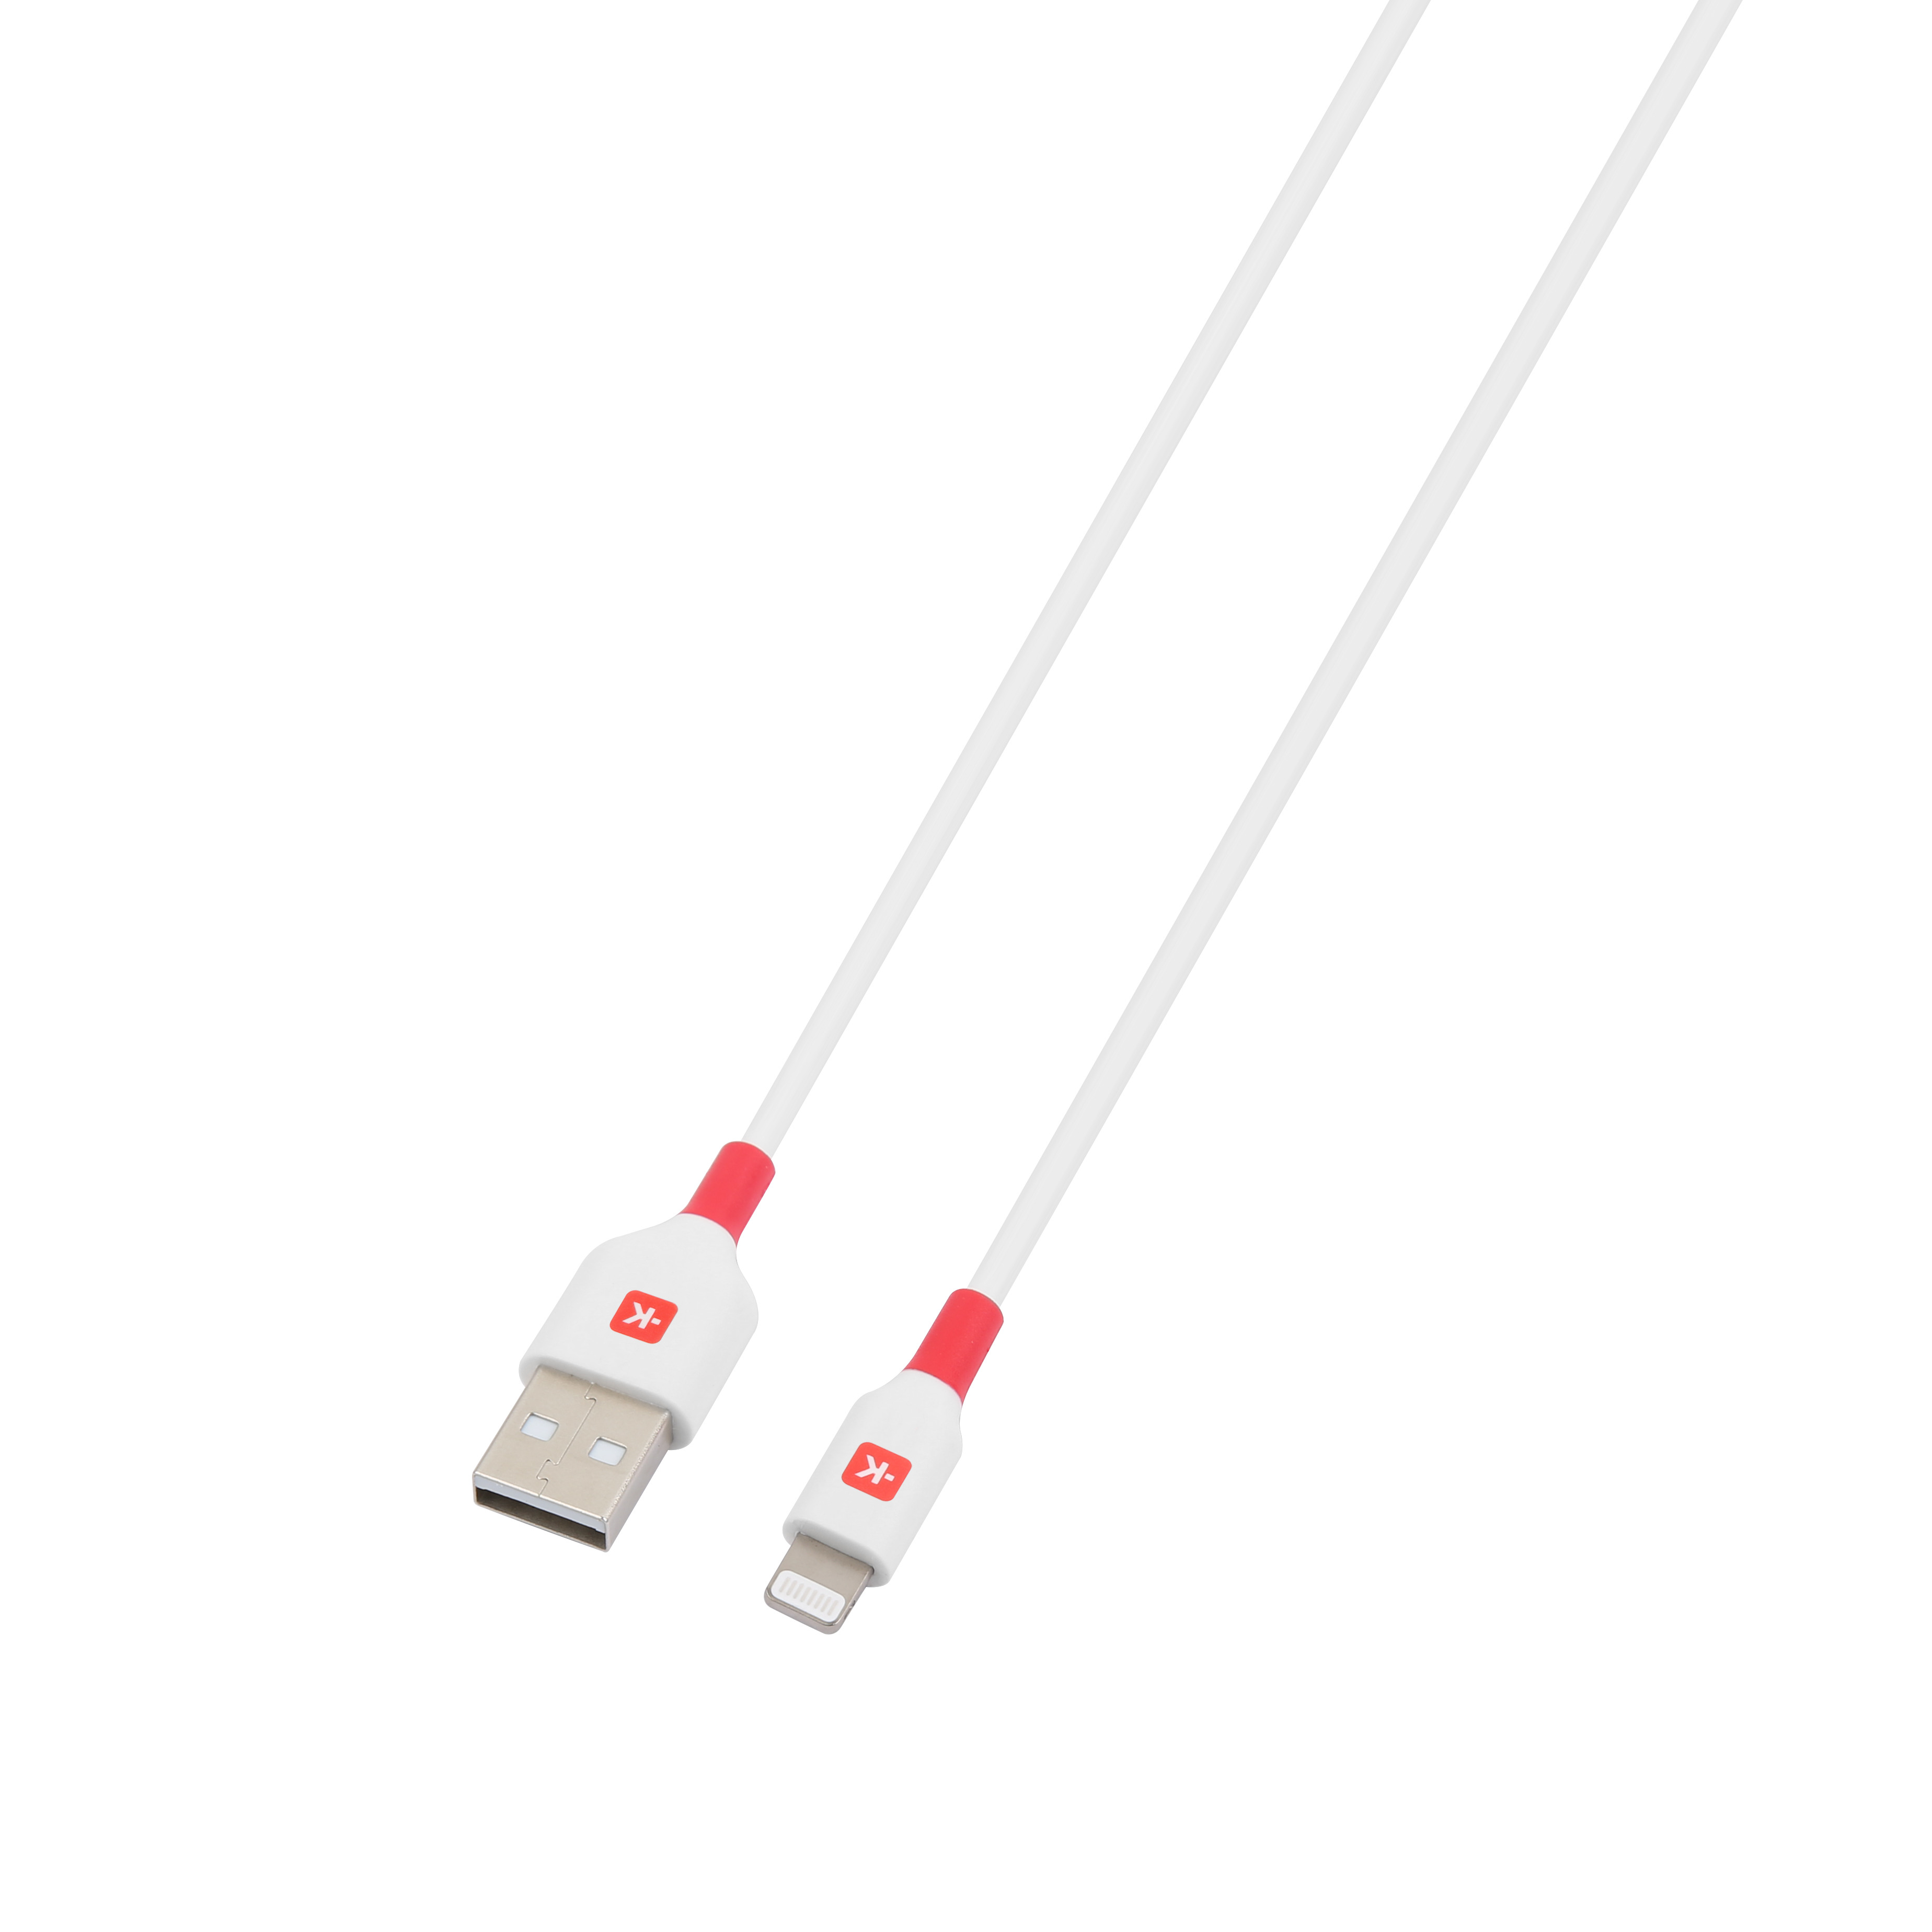 SKROSS USB to Lightning Cable SKCA0005A-MFI200CN 2m wht